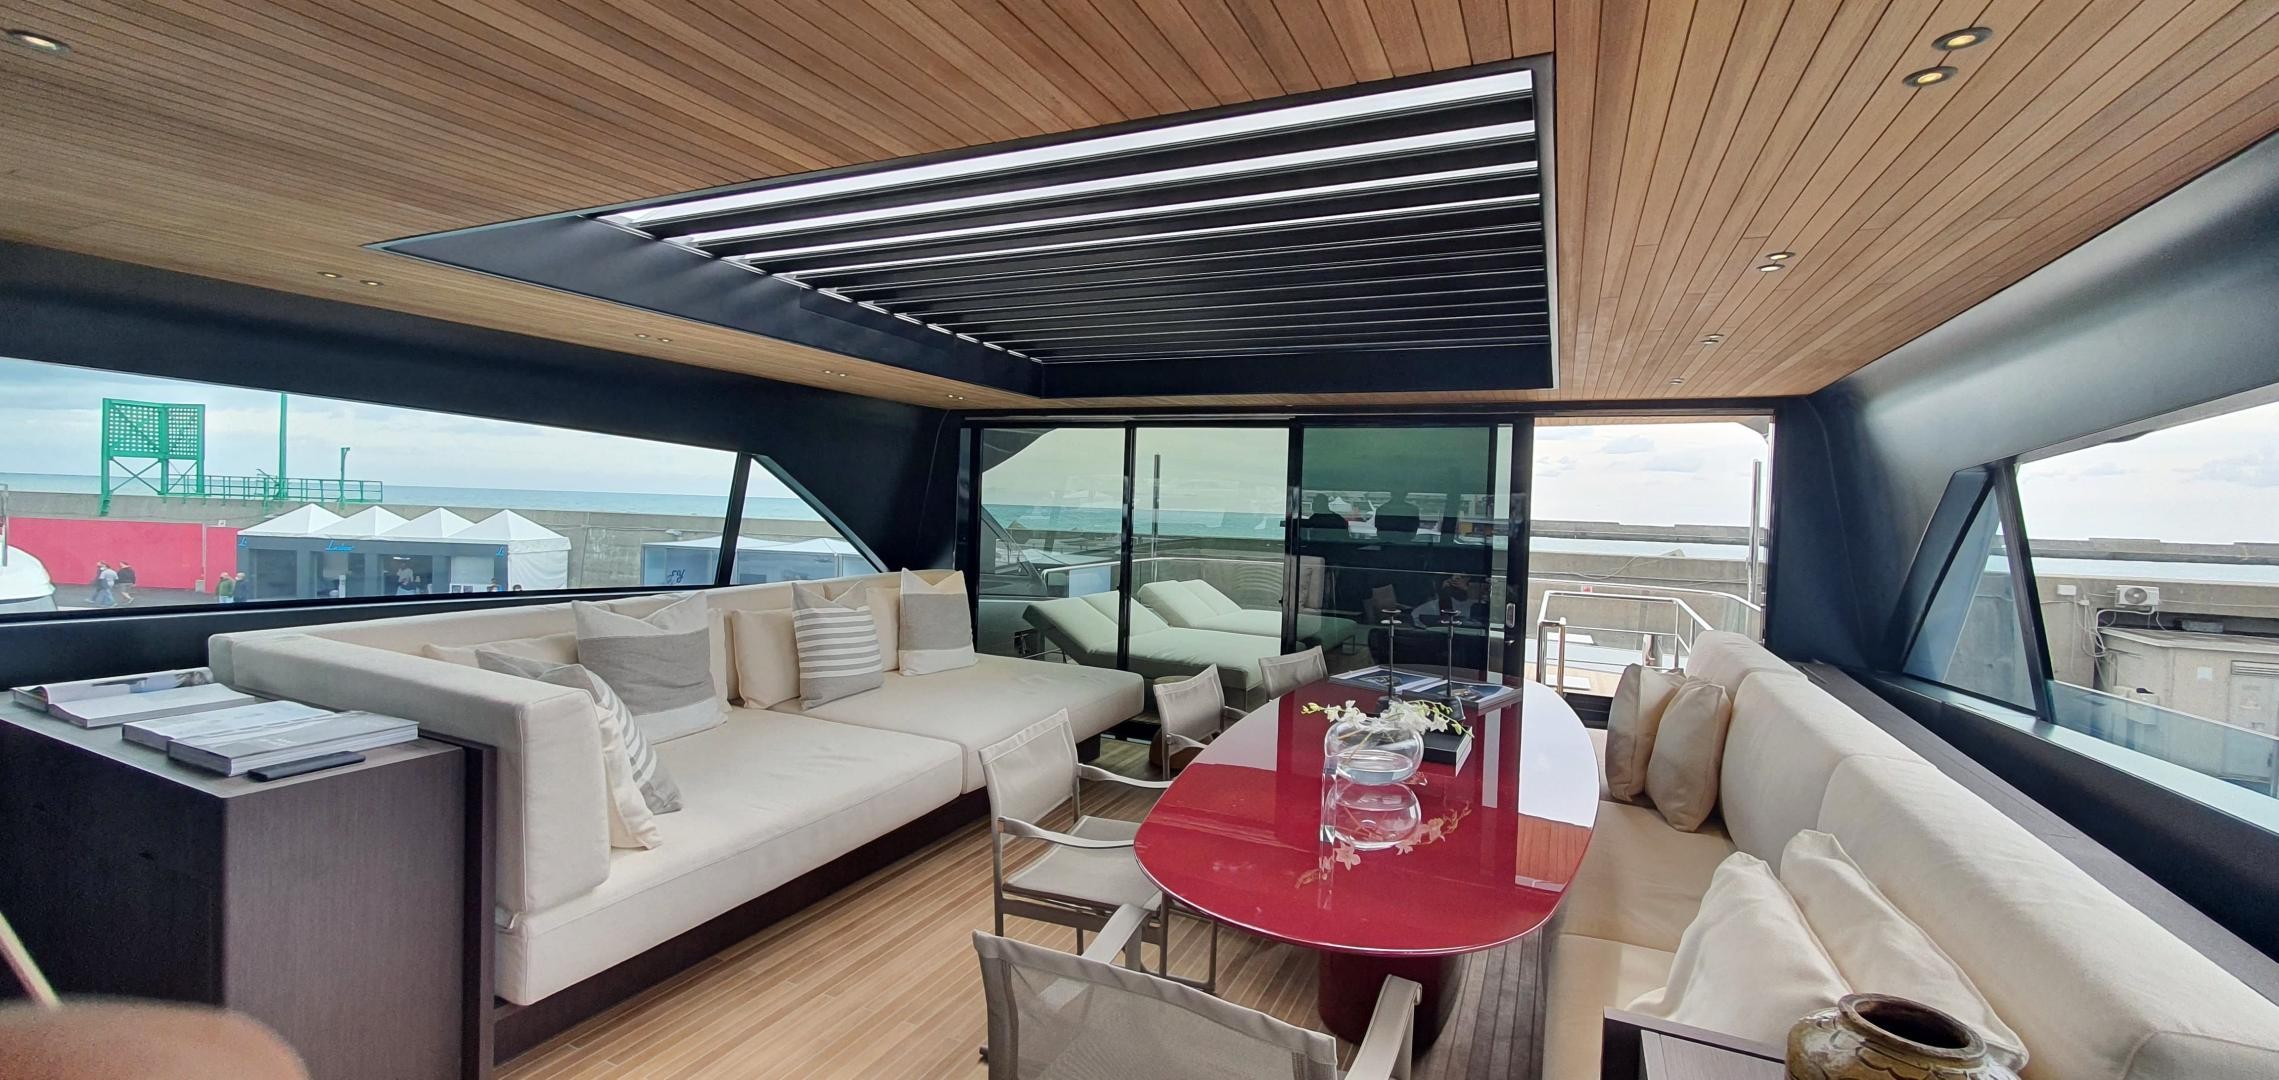 Hard-top Opac: tettucci su misura per grandi yacht